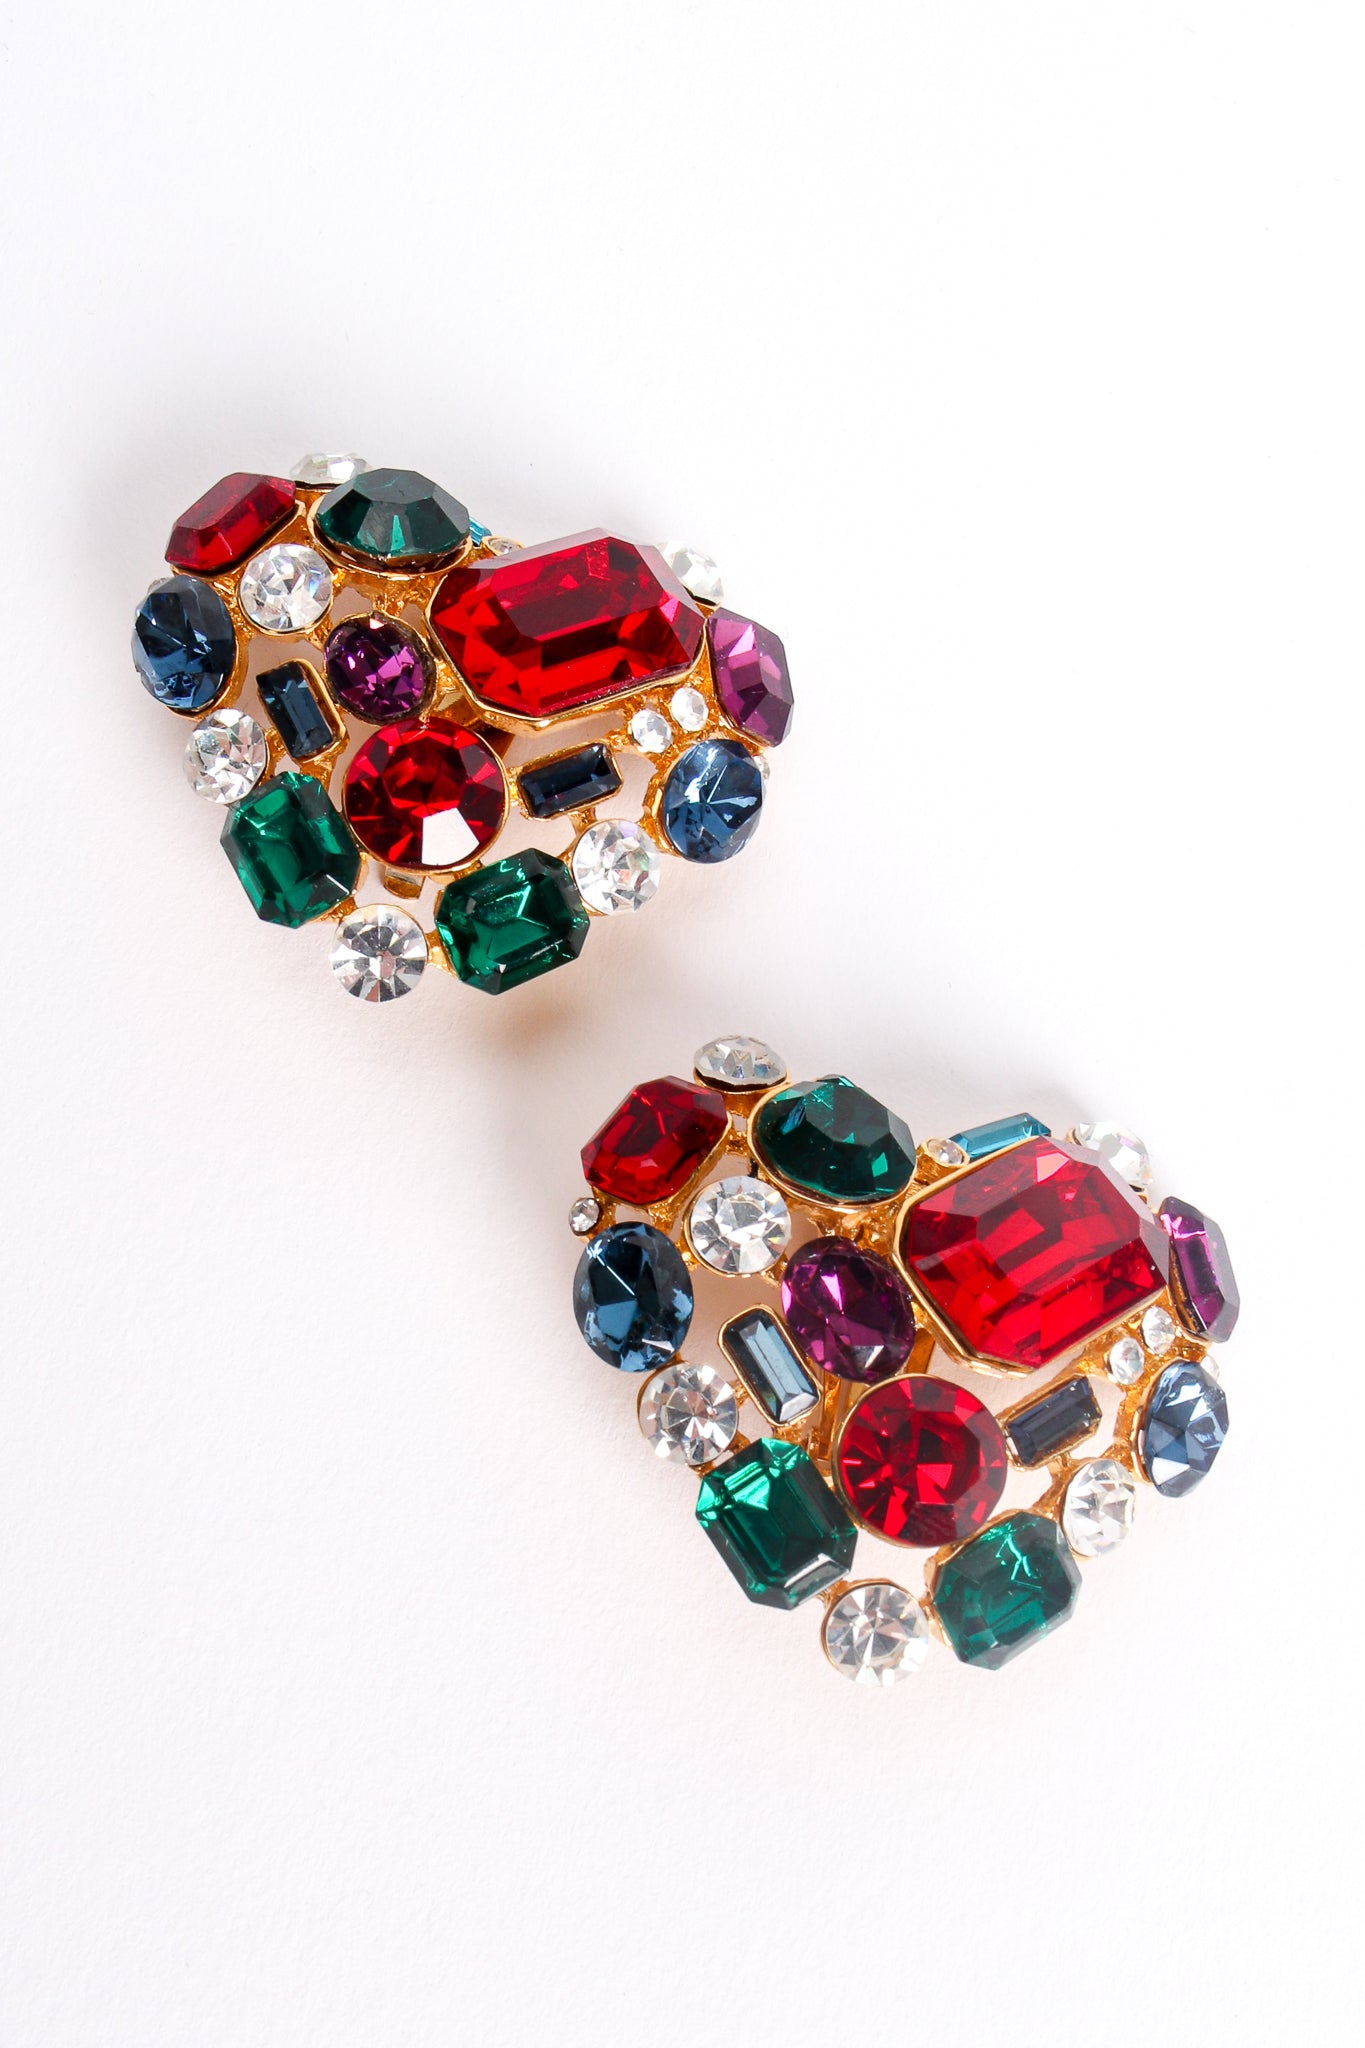 Vintage Les Bernard Vc Rainbow Crystal Heart Earrings at Recess Los Angeles